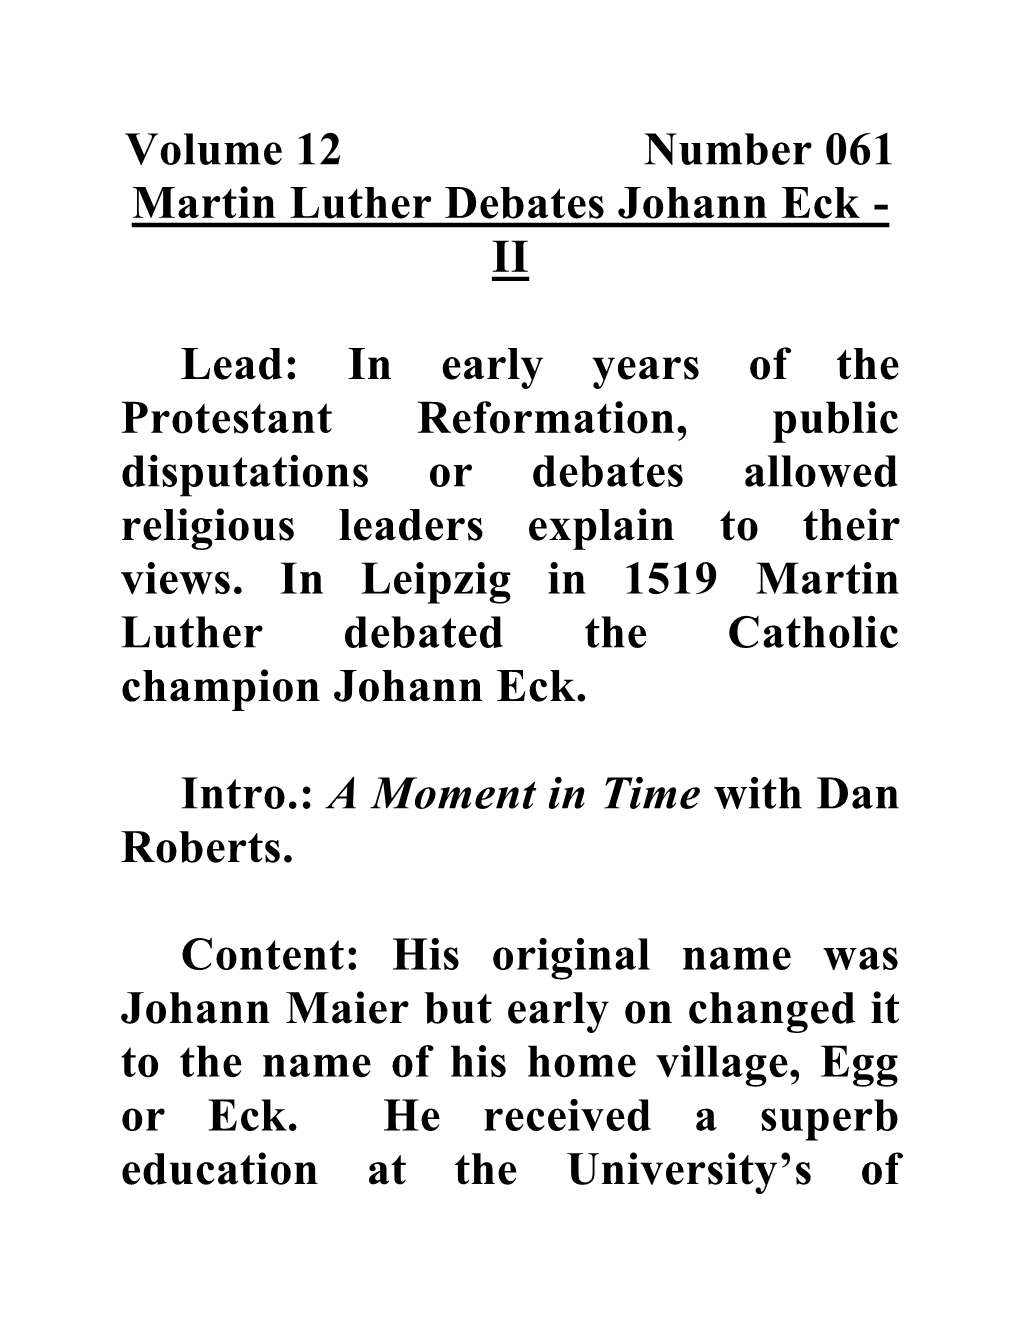 Volume 12 Number 061 Martin Luther Debates Johann Eck - II